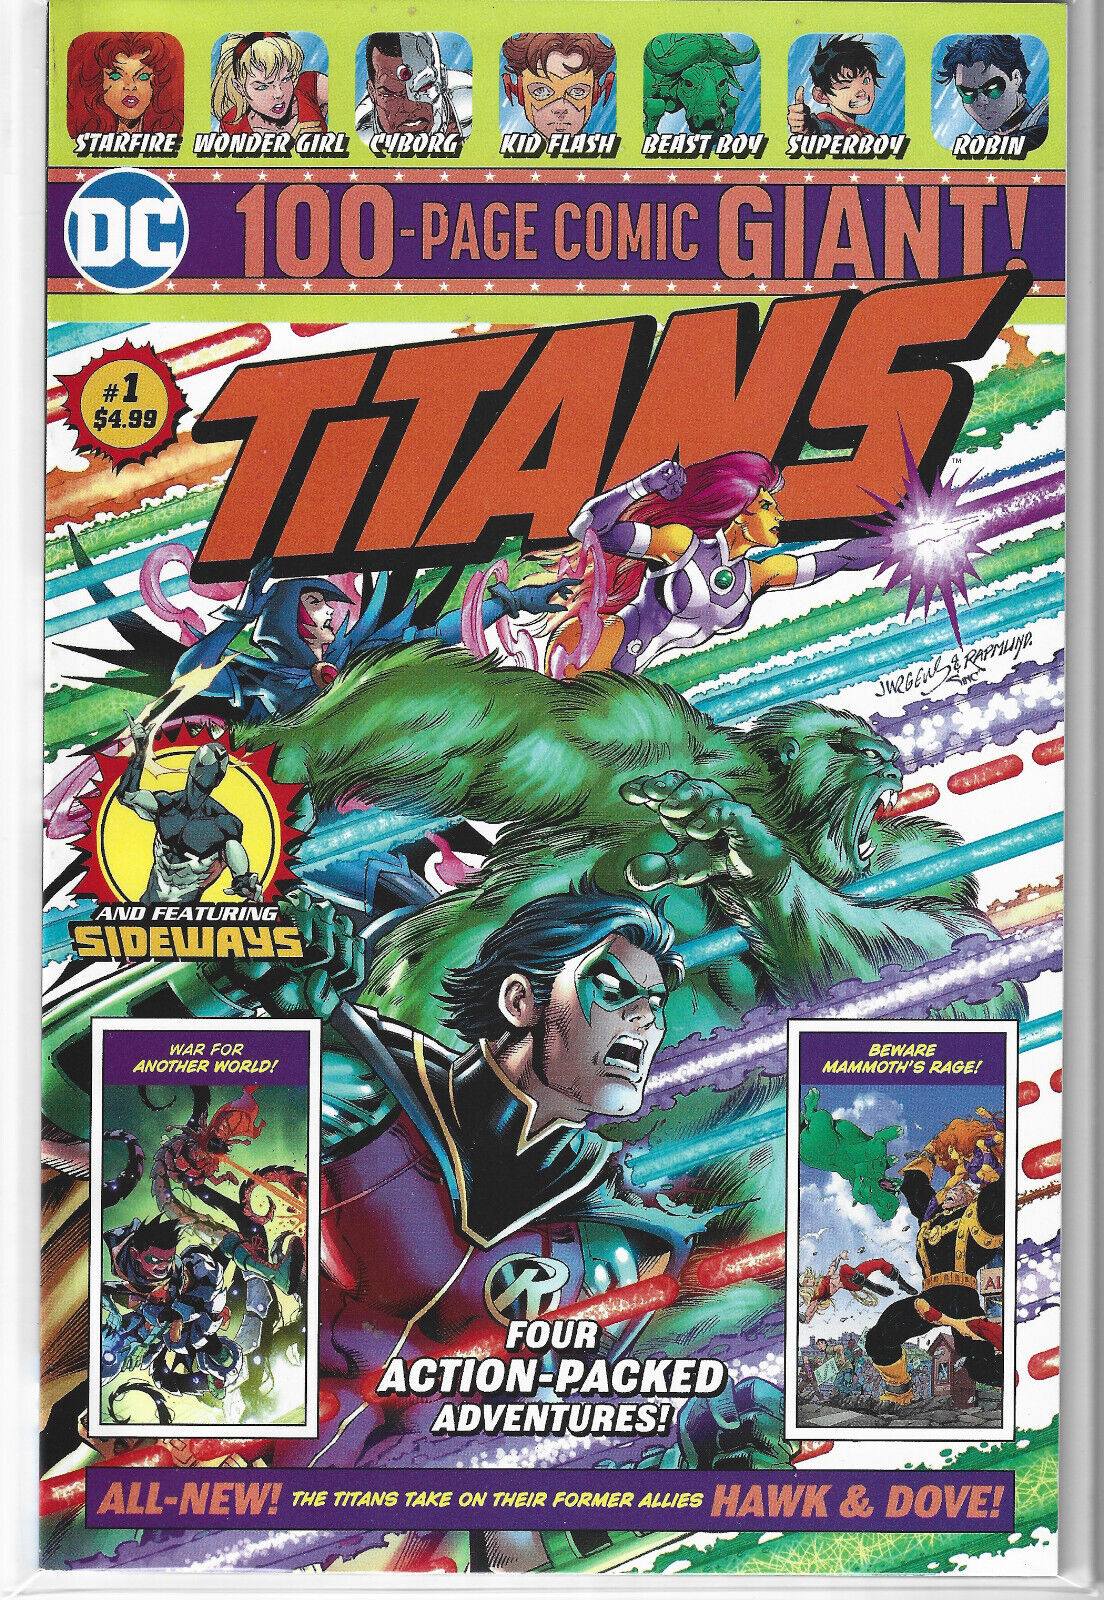 2019 DC COMICS TEEN TITANS 100 PAGE GIANT #1